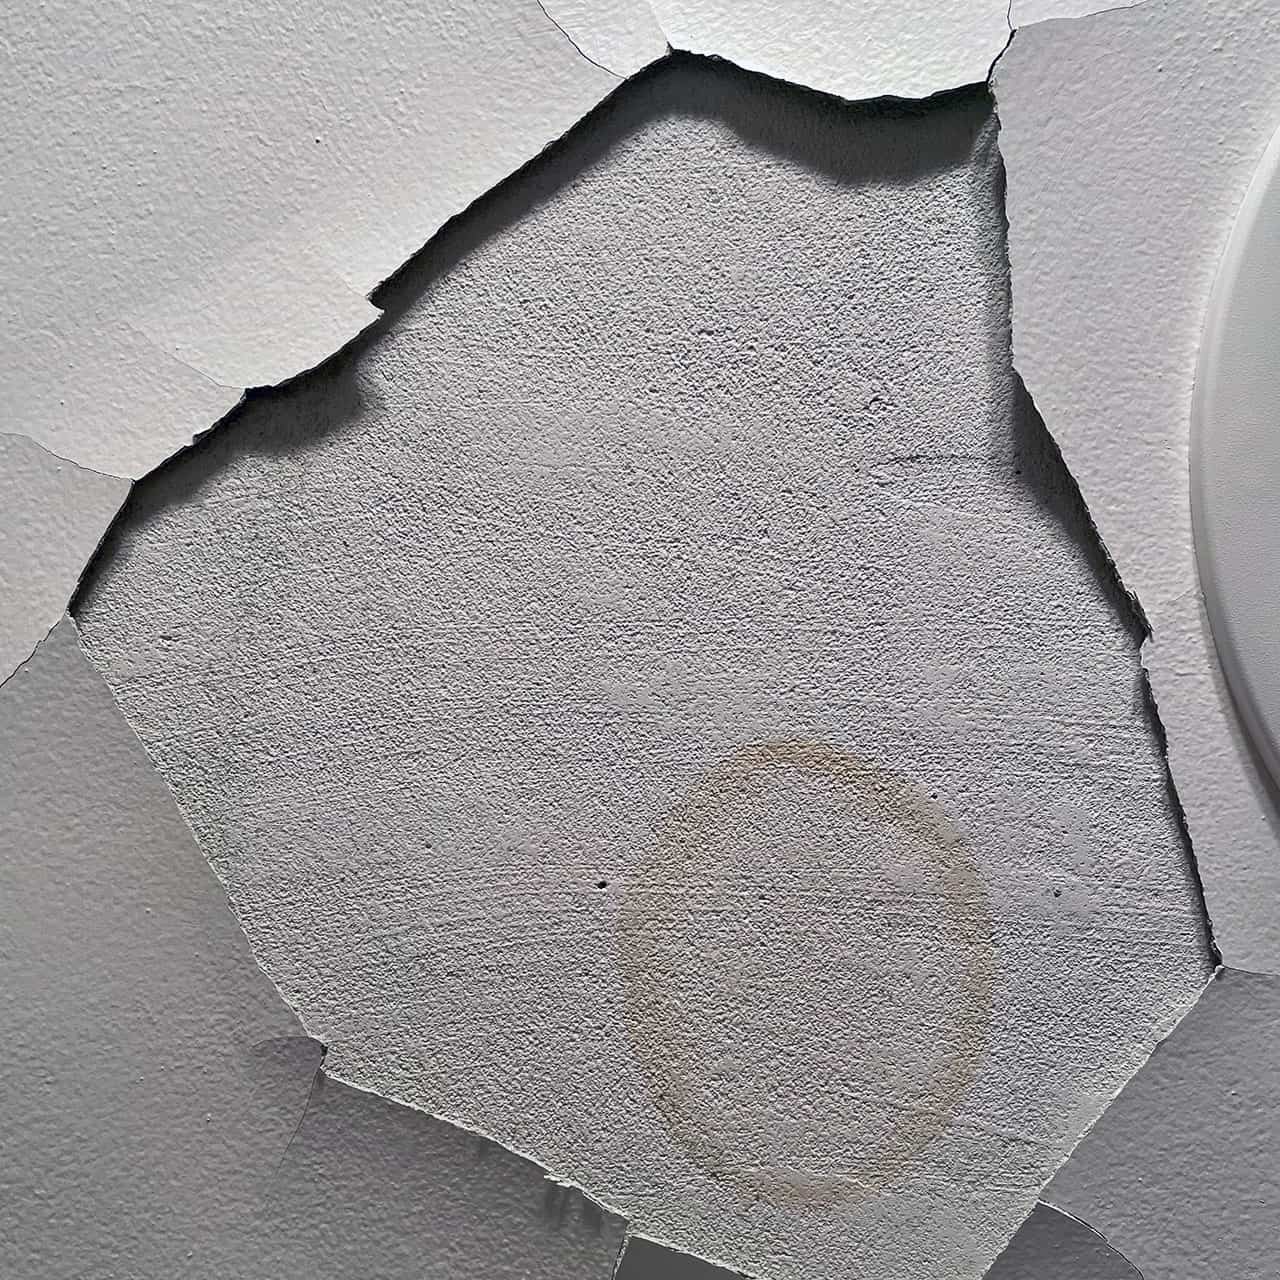 The growing leak in our bathroom ceiling